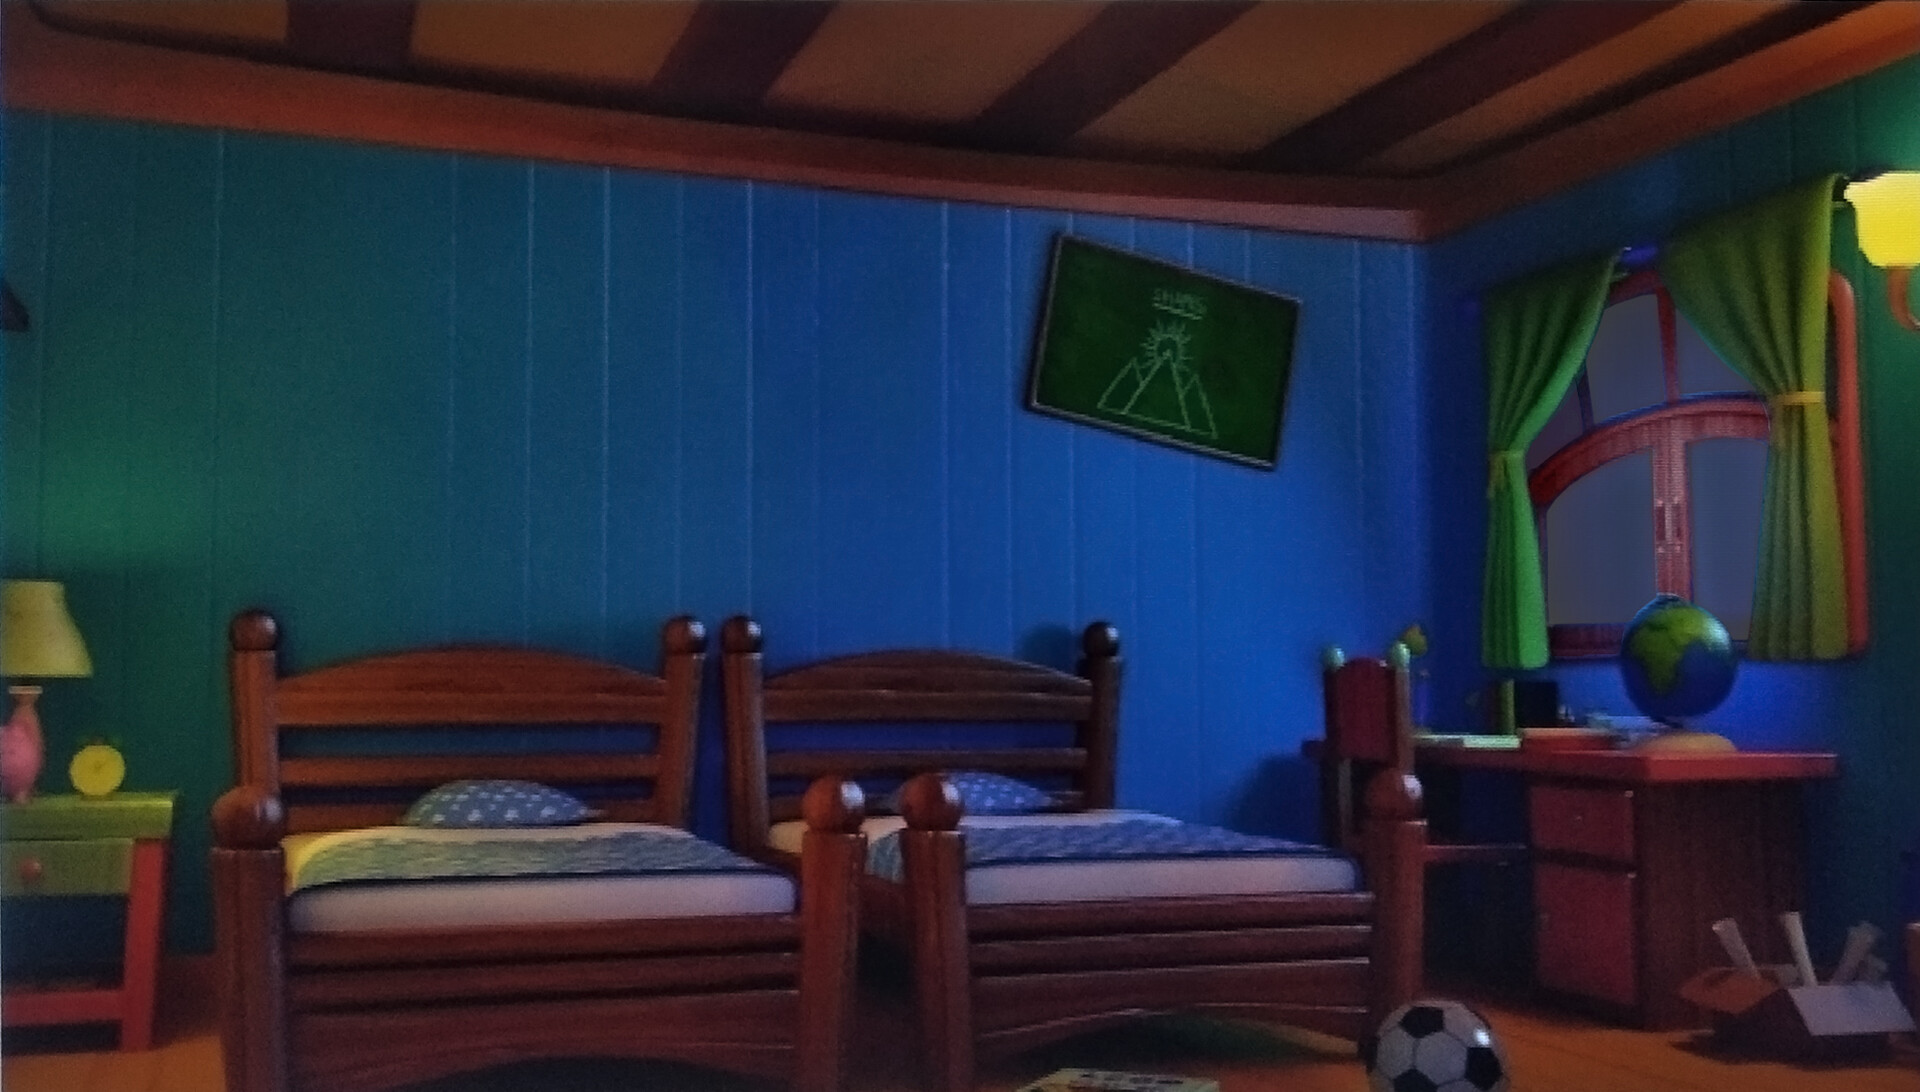 Arka Roy Vray Child Room Look And Feel Night Light